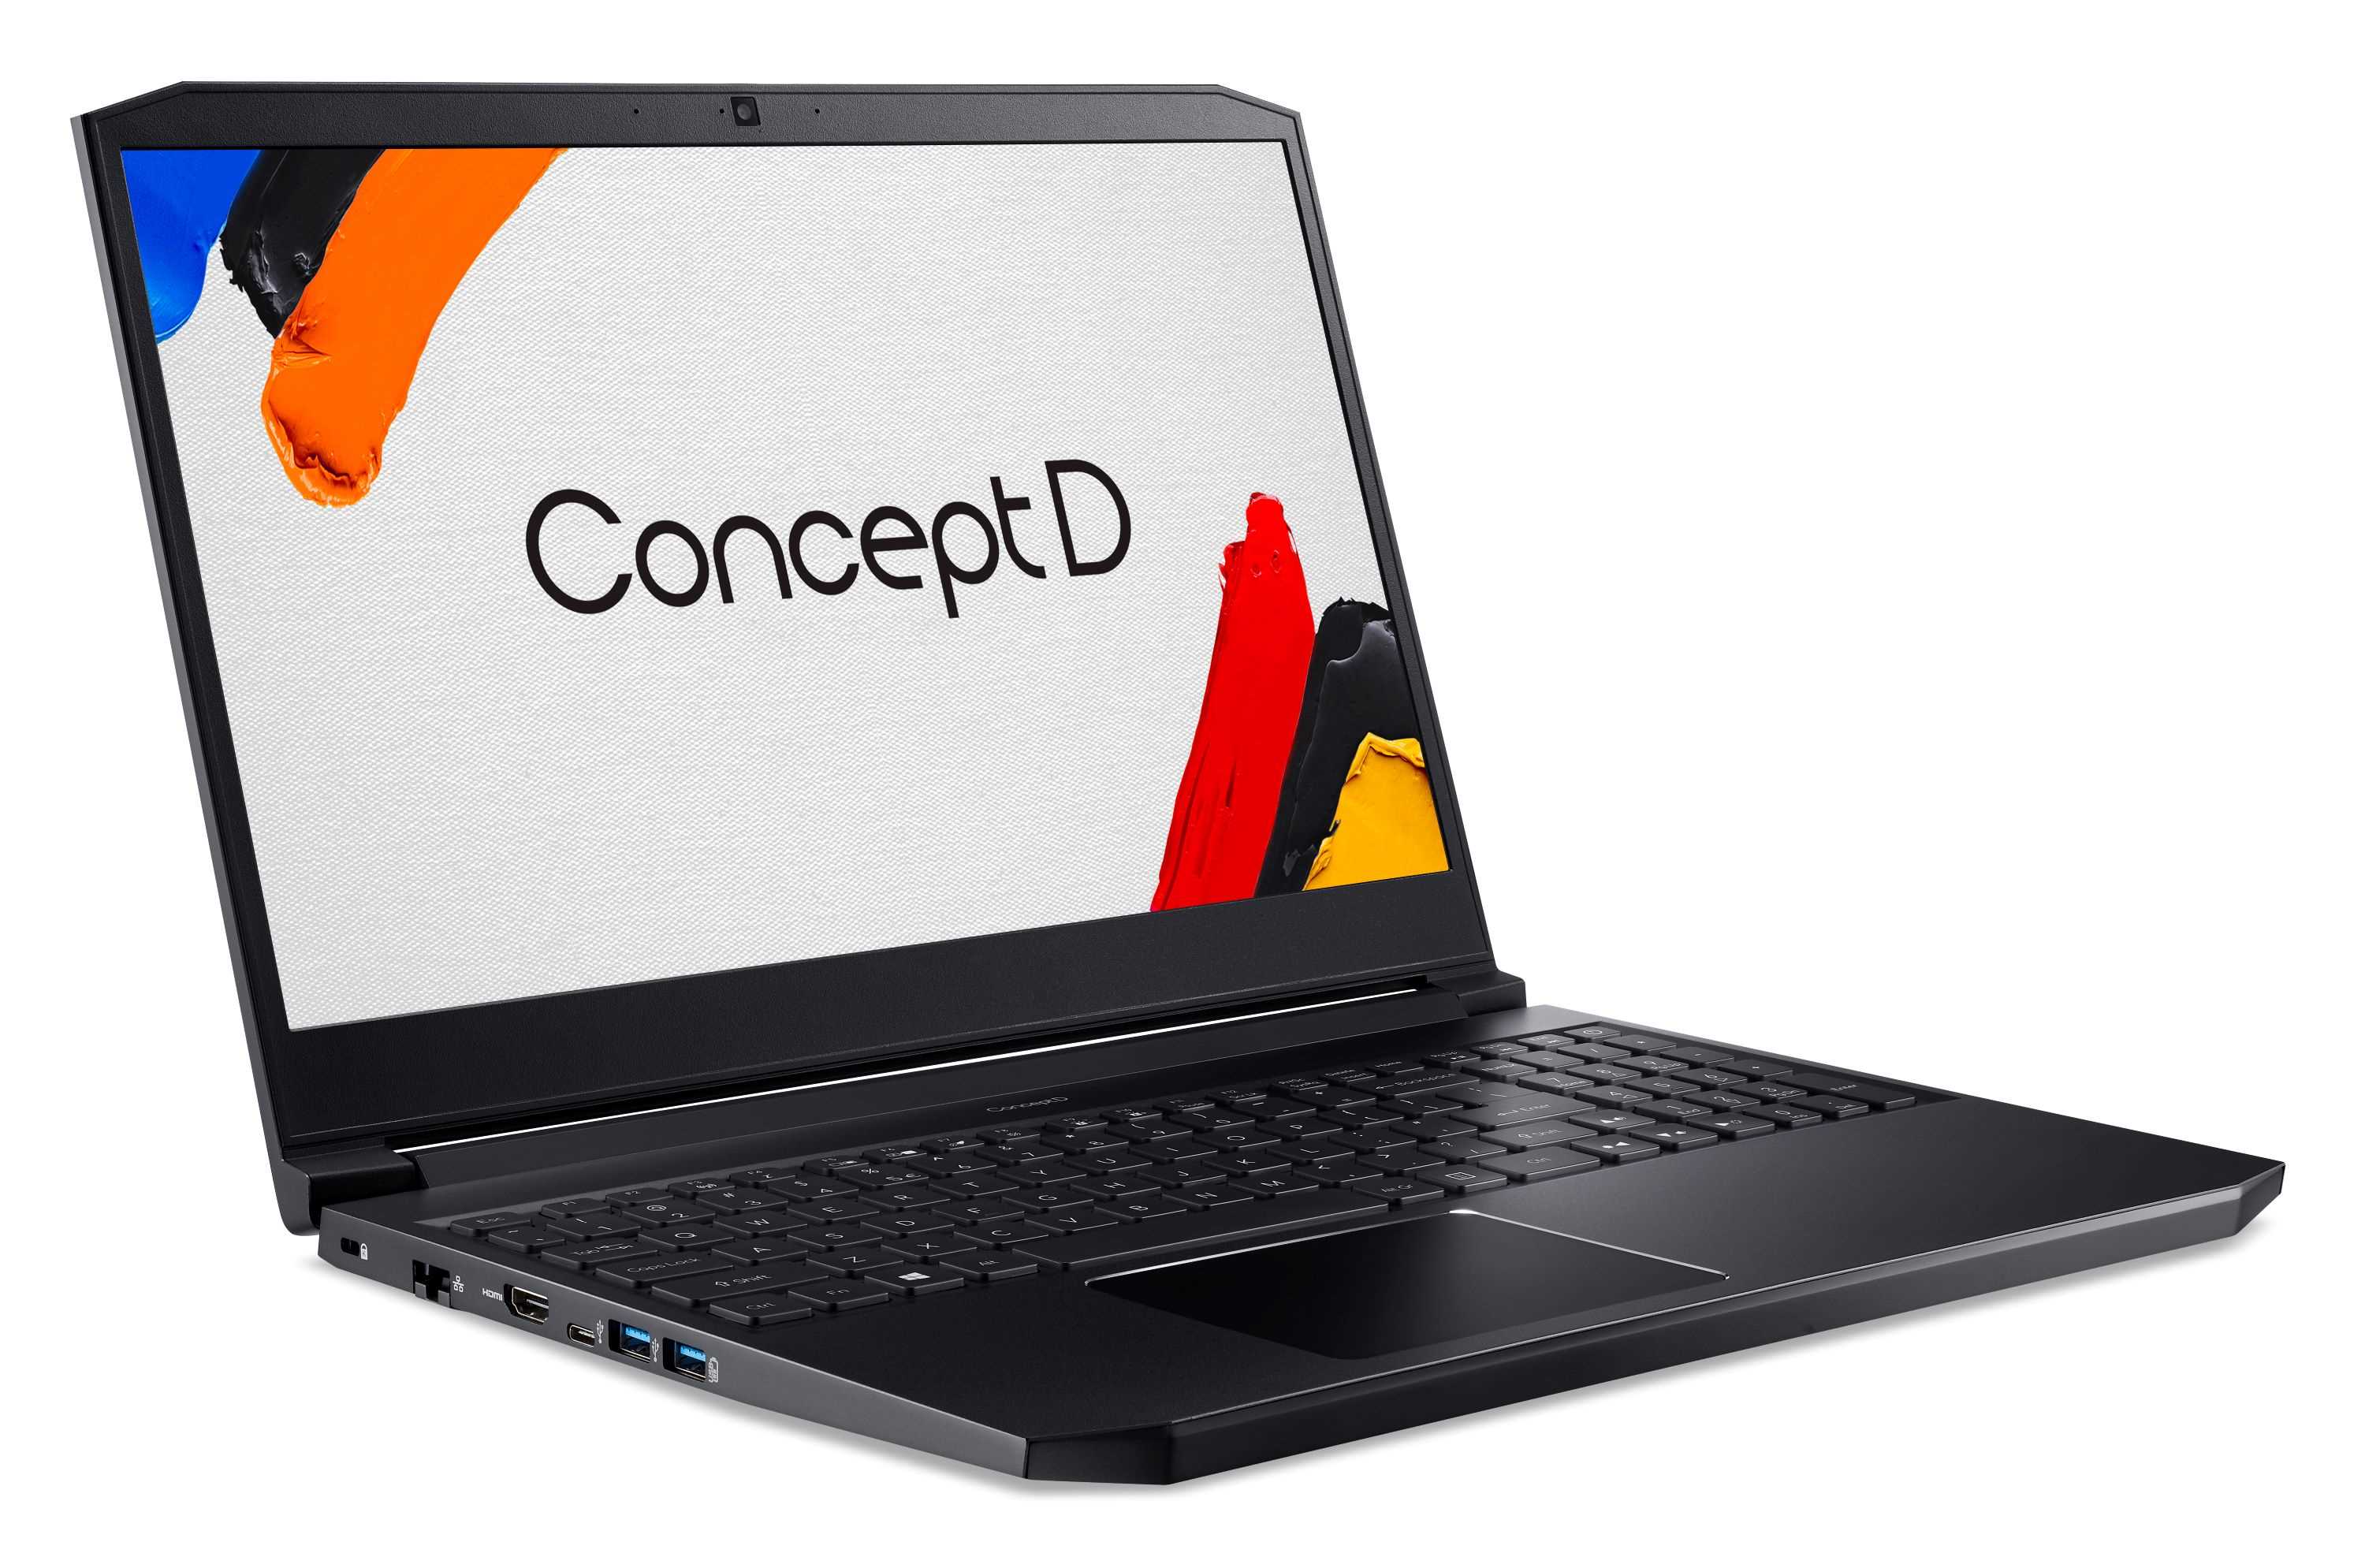 conceptd 5 cn515 71 71p wp logo 02 rere ครีเอทให้สุดแล้วไปหยุดที่ ConceptD 3 Pro & ConceptD 5 Pro โปรแล็ปท็อปสำหรับมือโปรสายกราฟิกดีไซน์